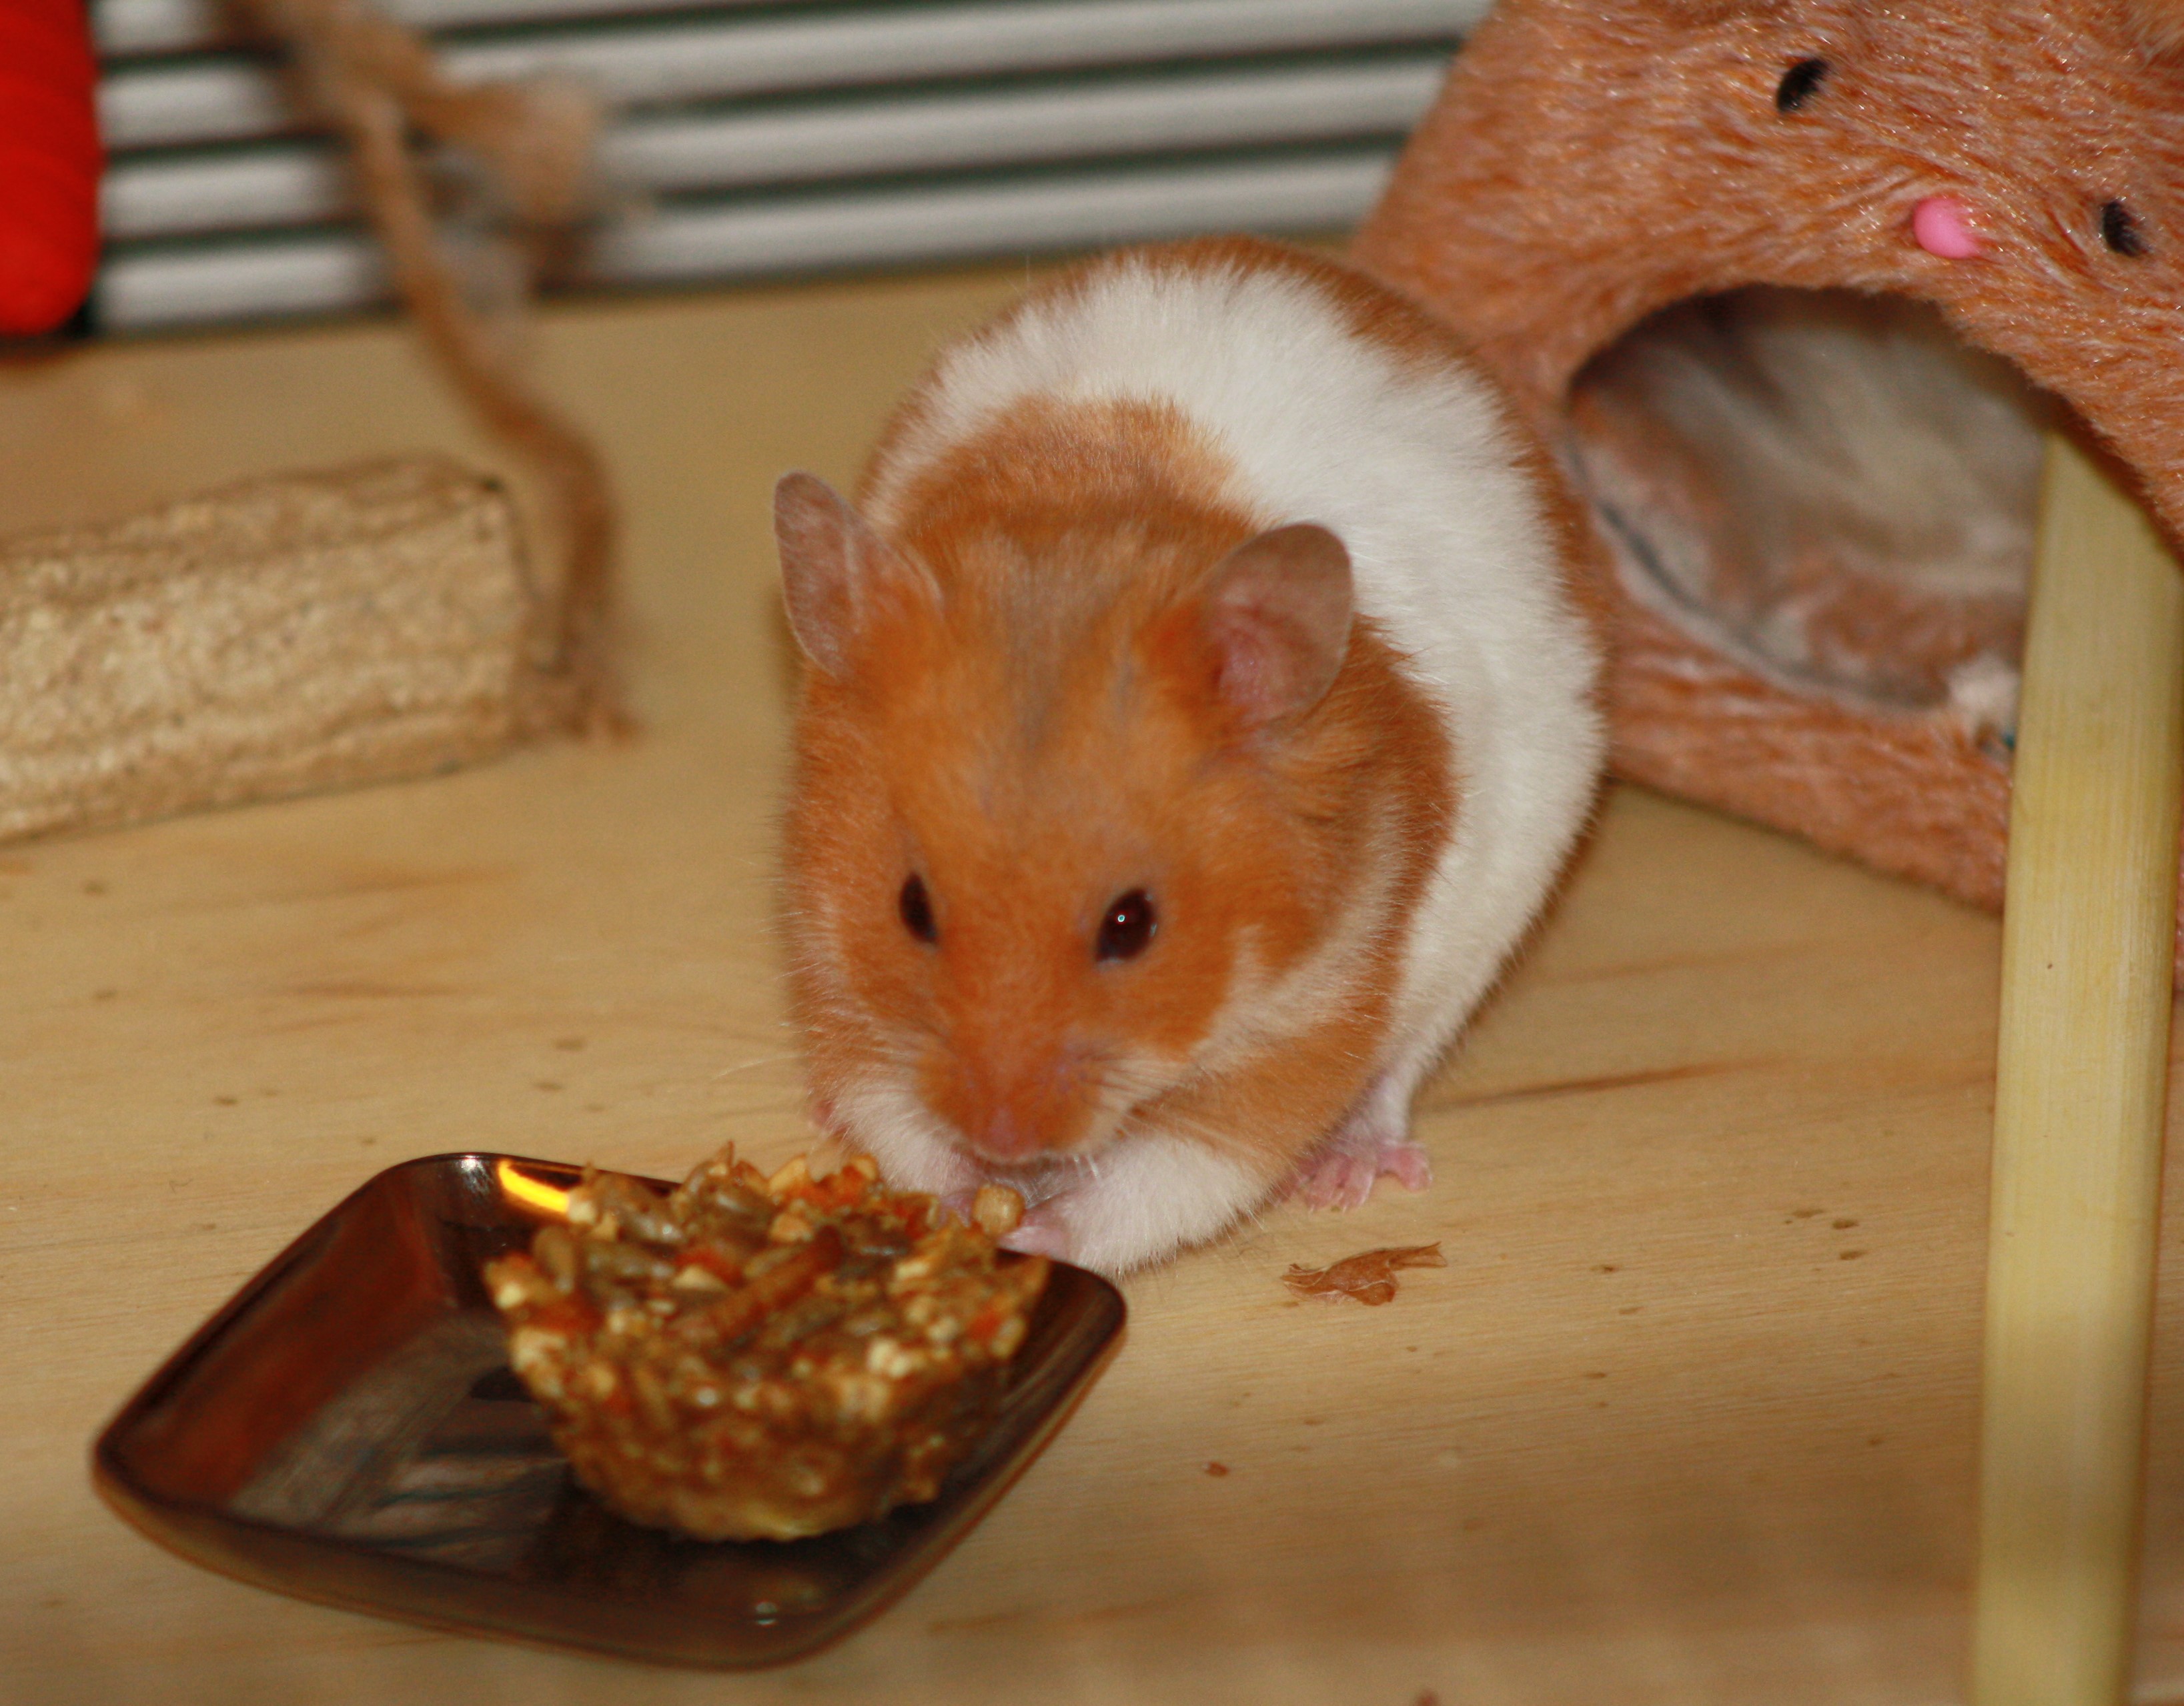 Milku eating a hamster treat